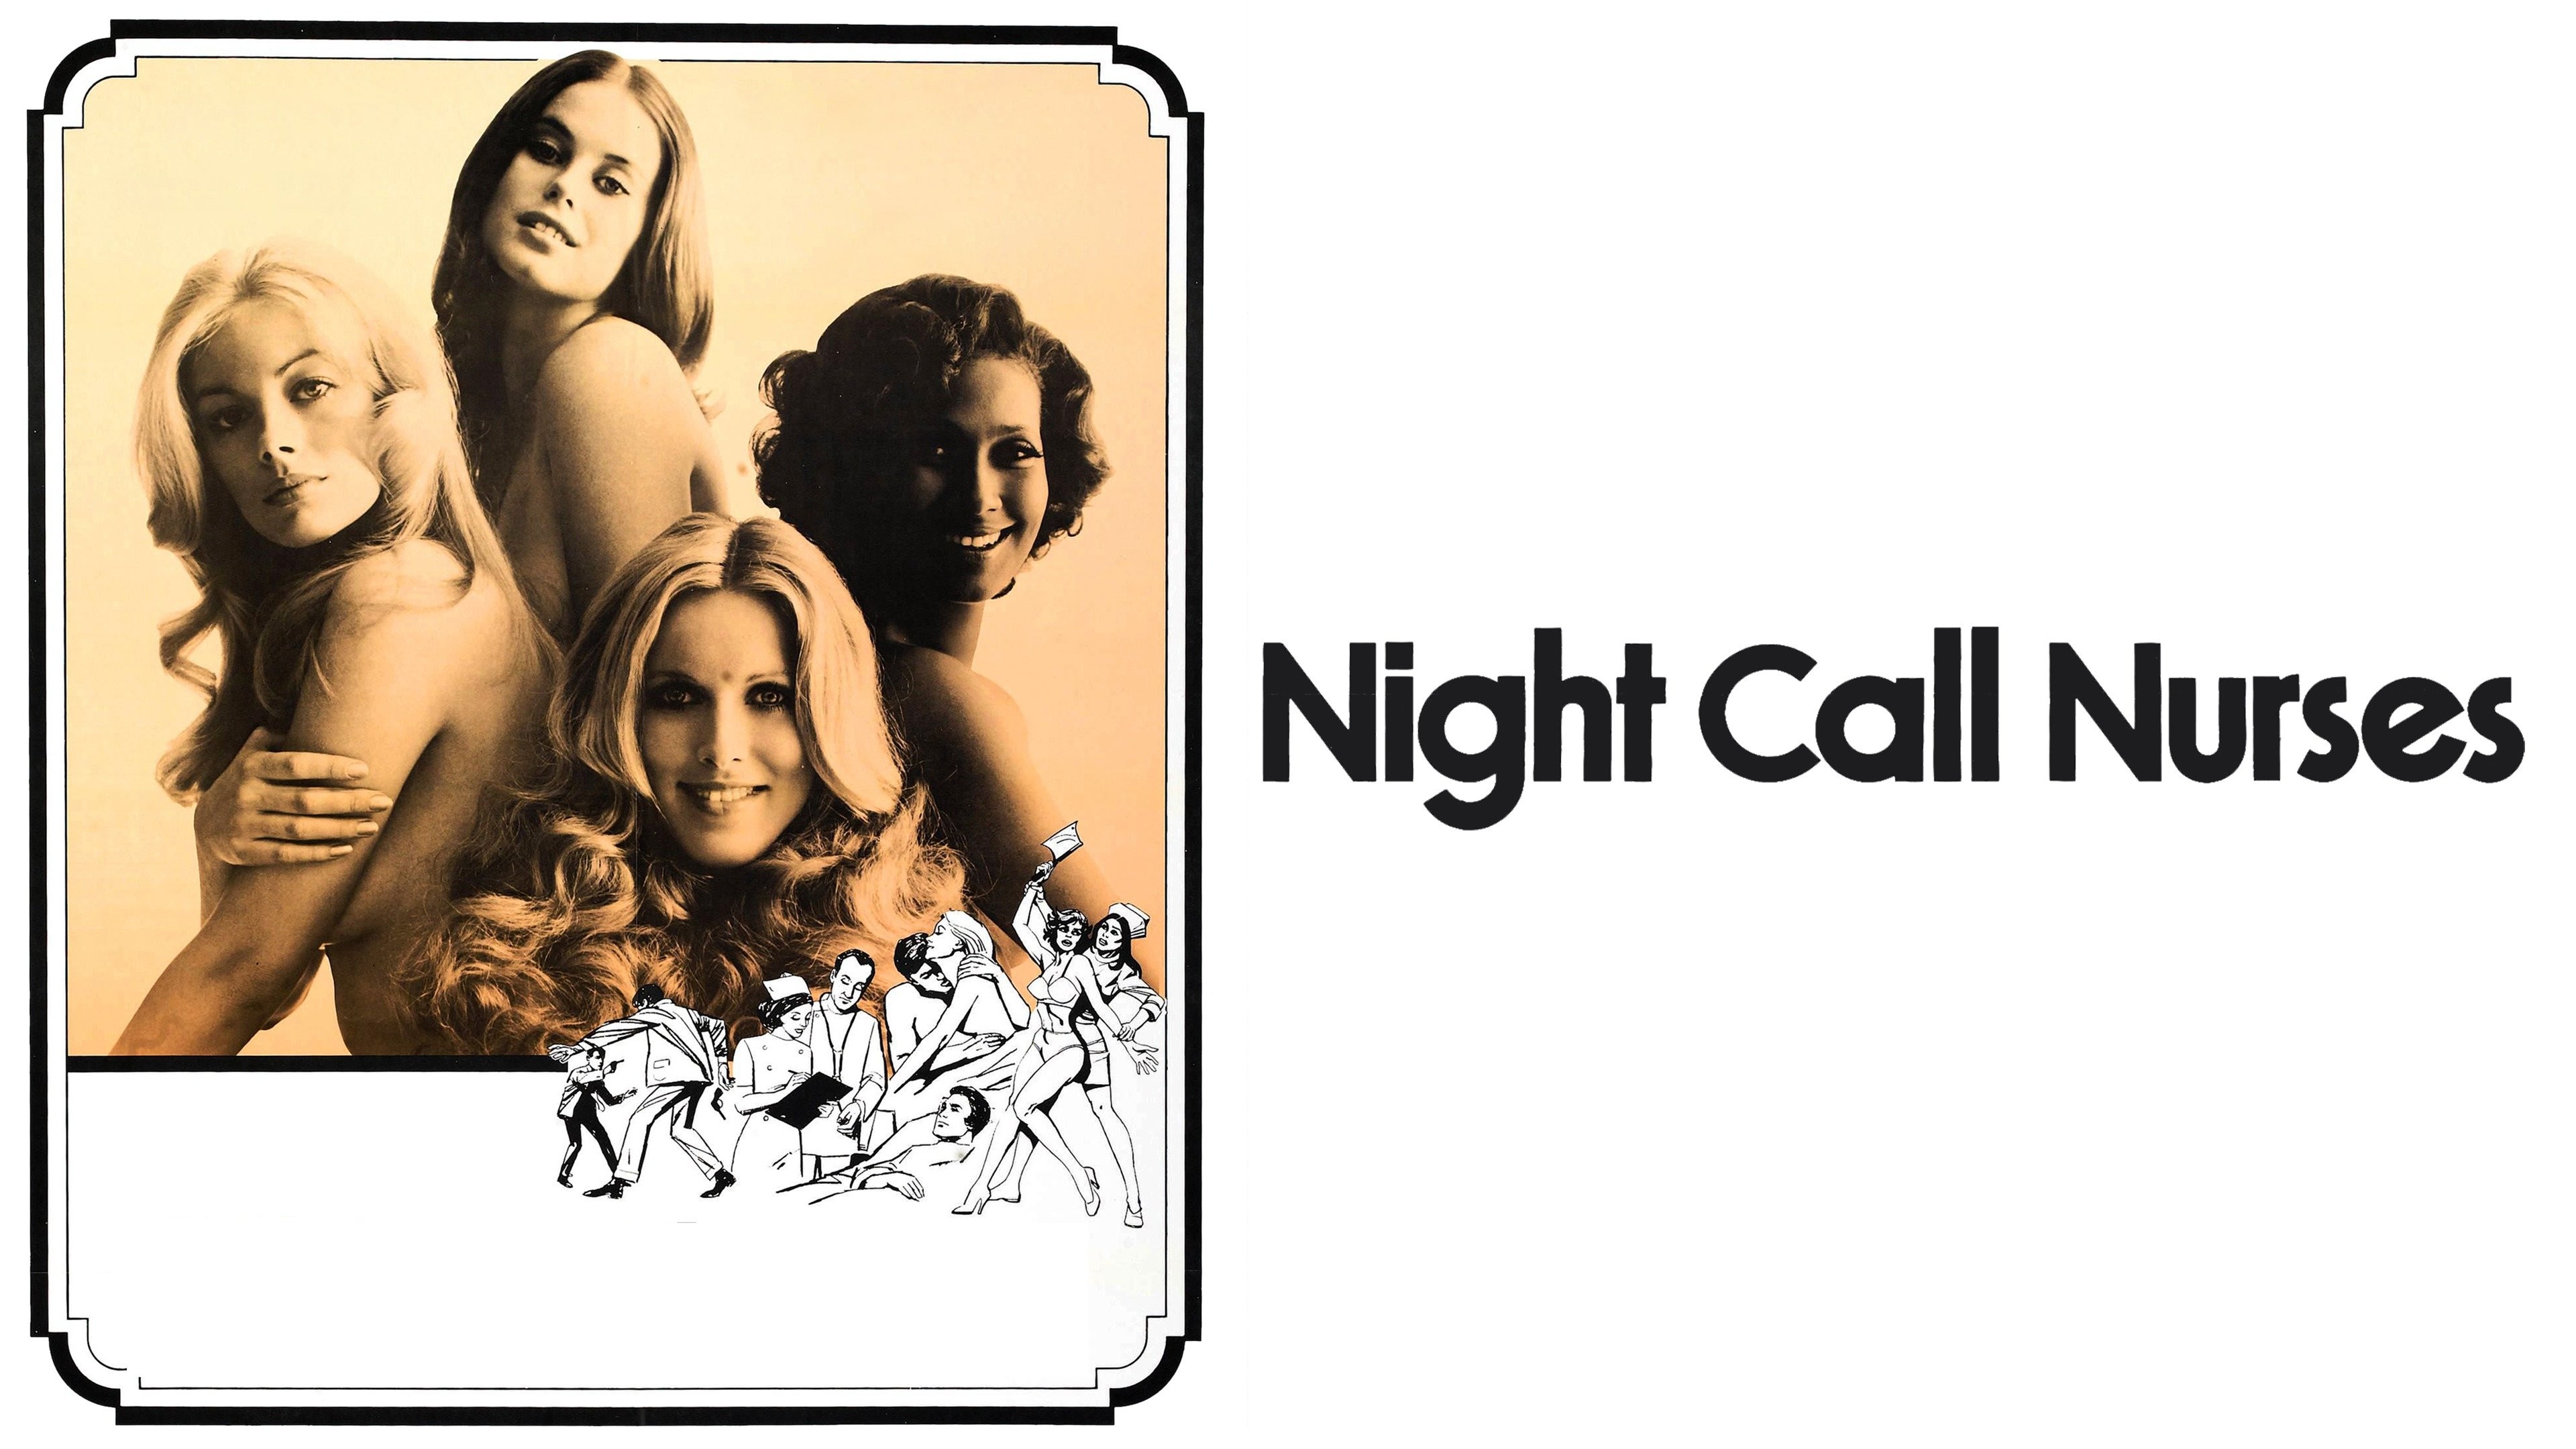 Night Call Nurses (1972) - IMDb